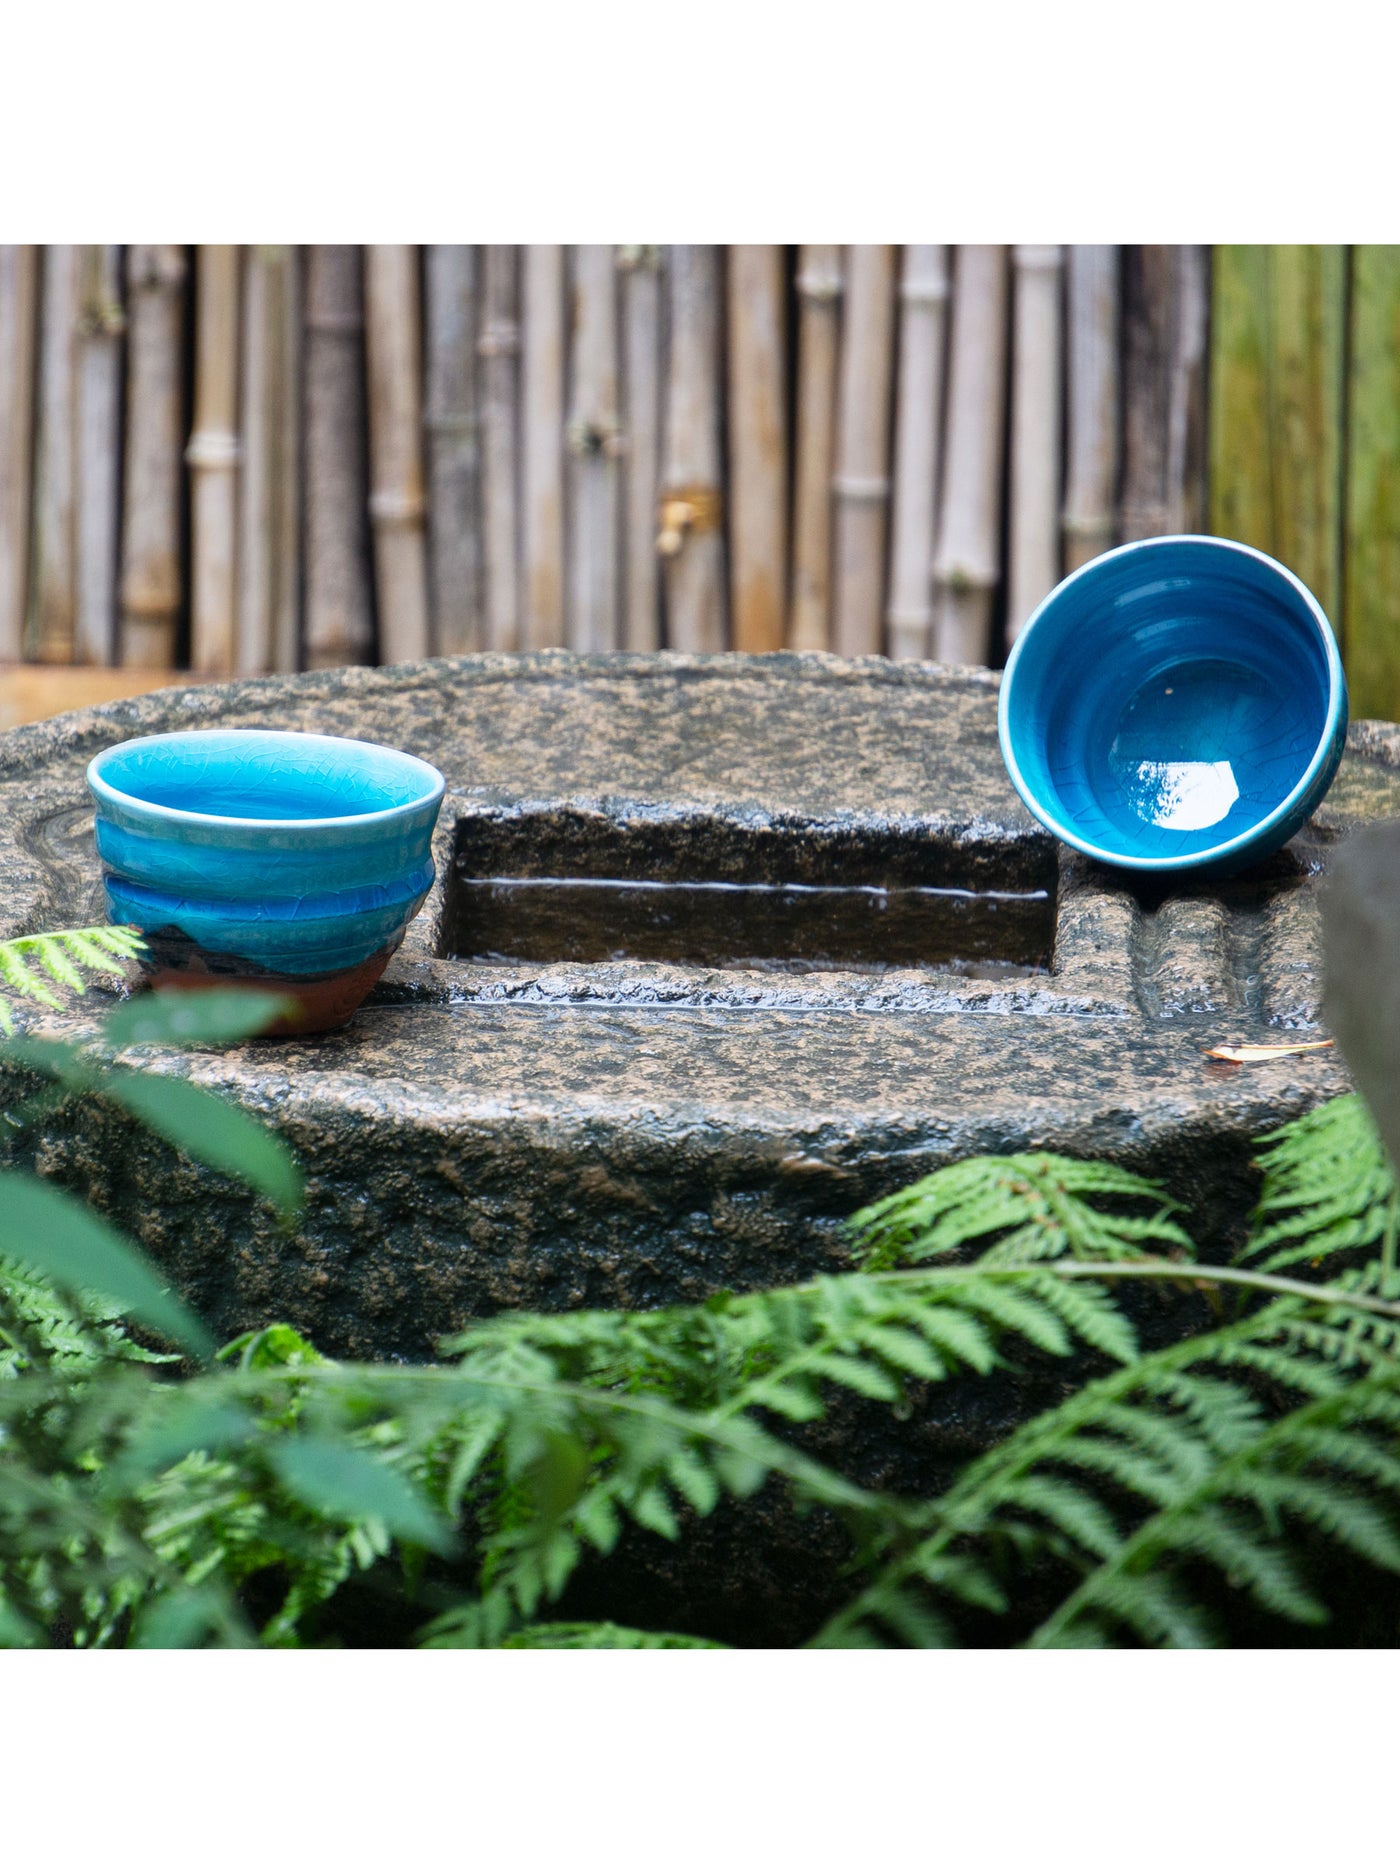 Ensemble de tasses à thé Ku Bleu Kyoto de Ninshu (200ml/7fl.oz)